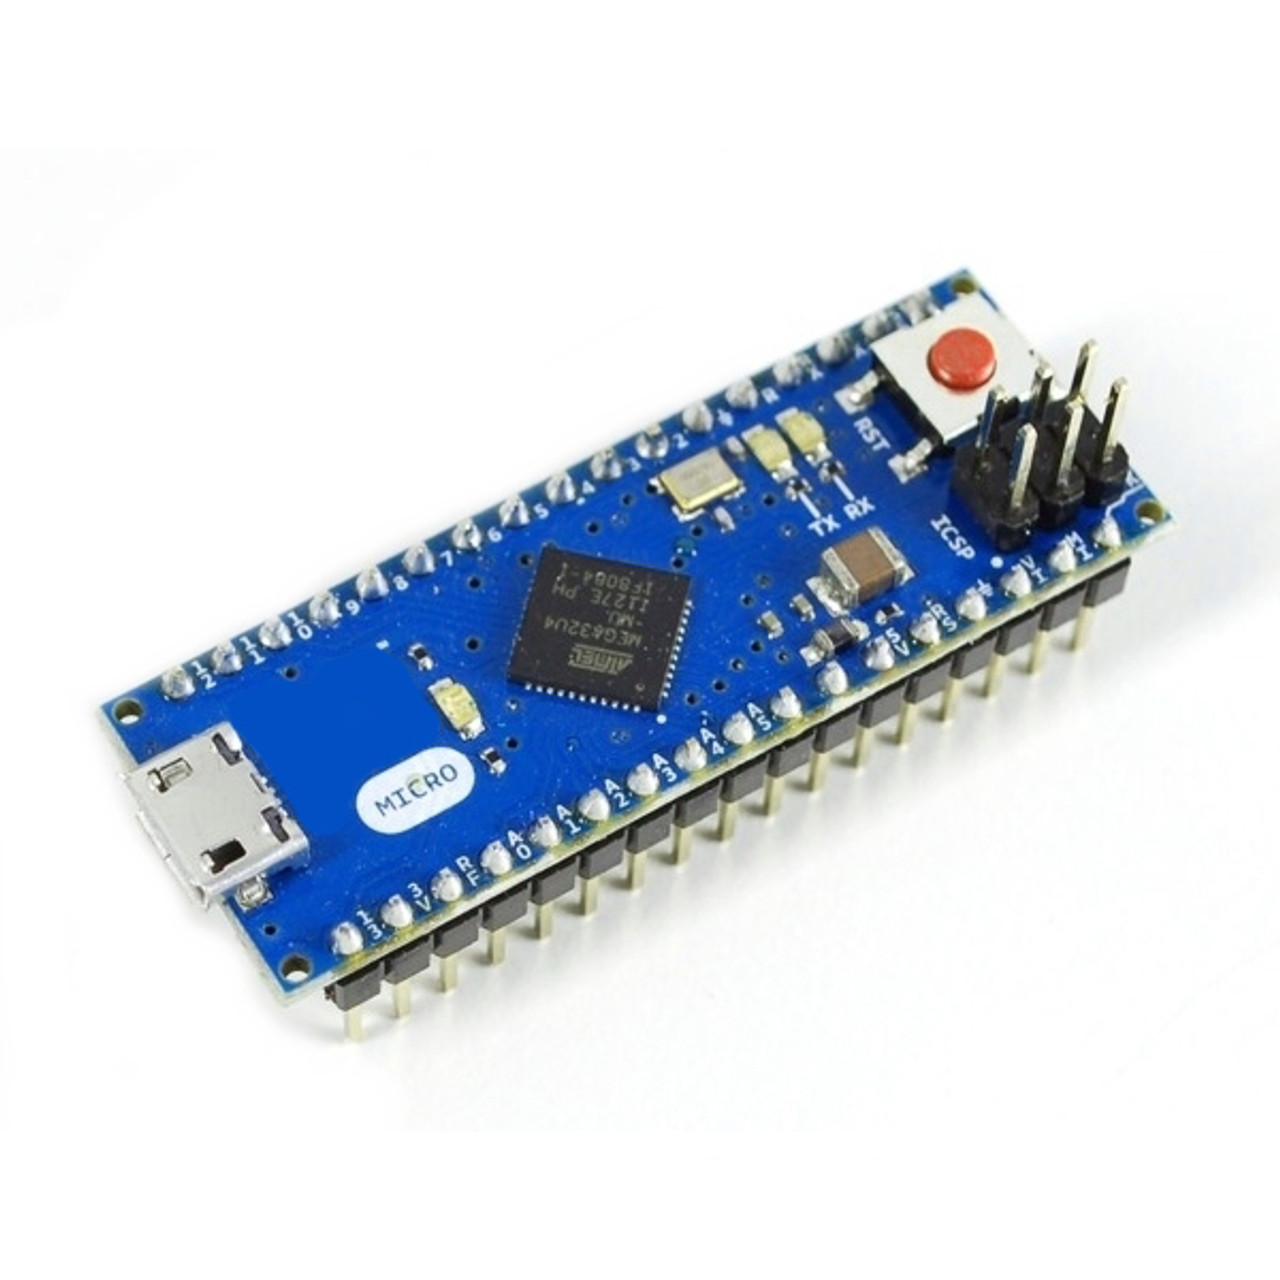 TXG Kit de Electronica, Kit Arduino, Protoboard Kit Compatibles